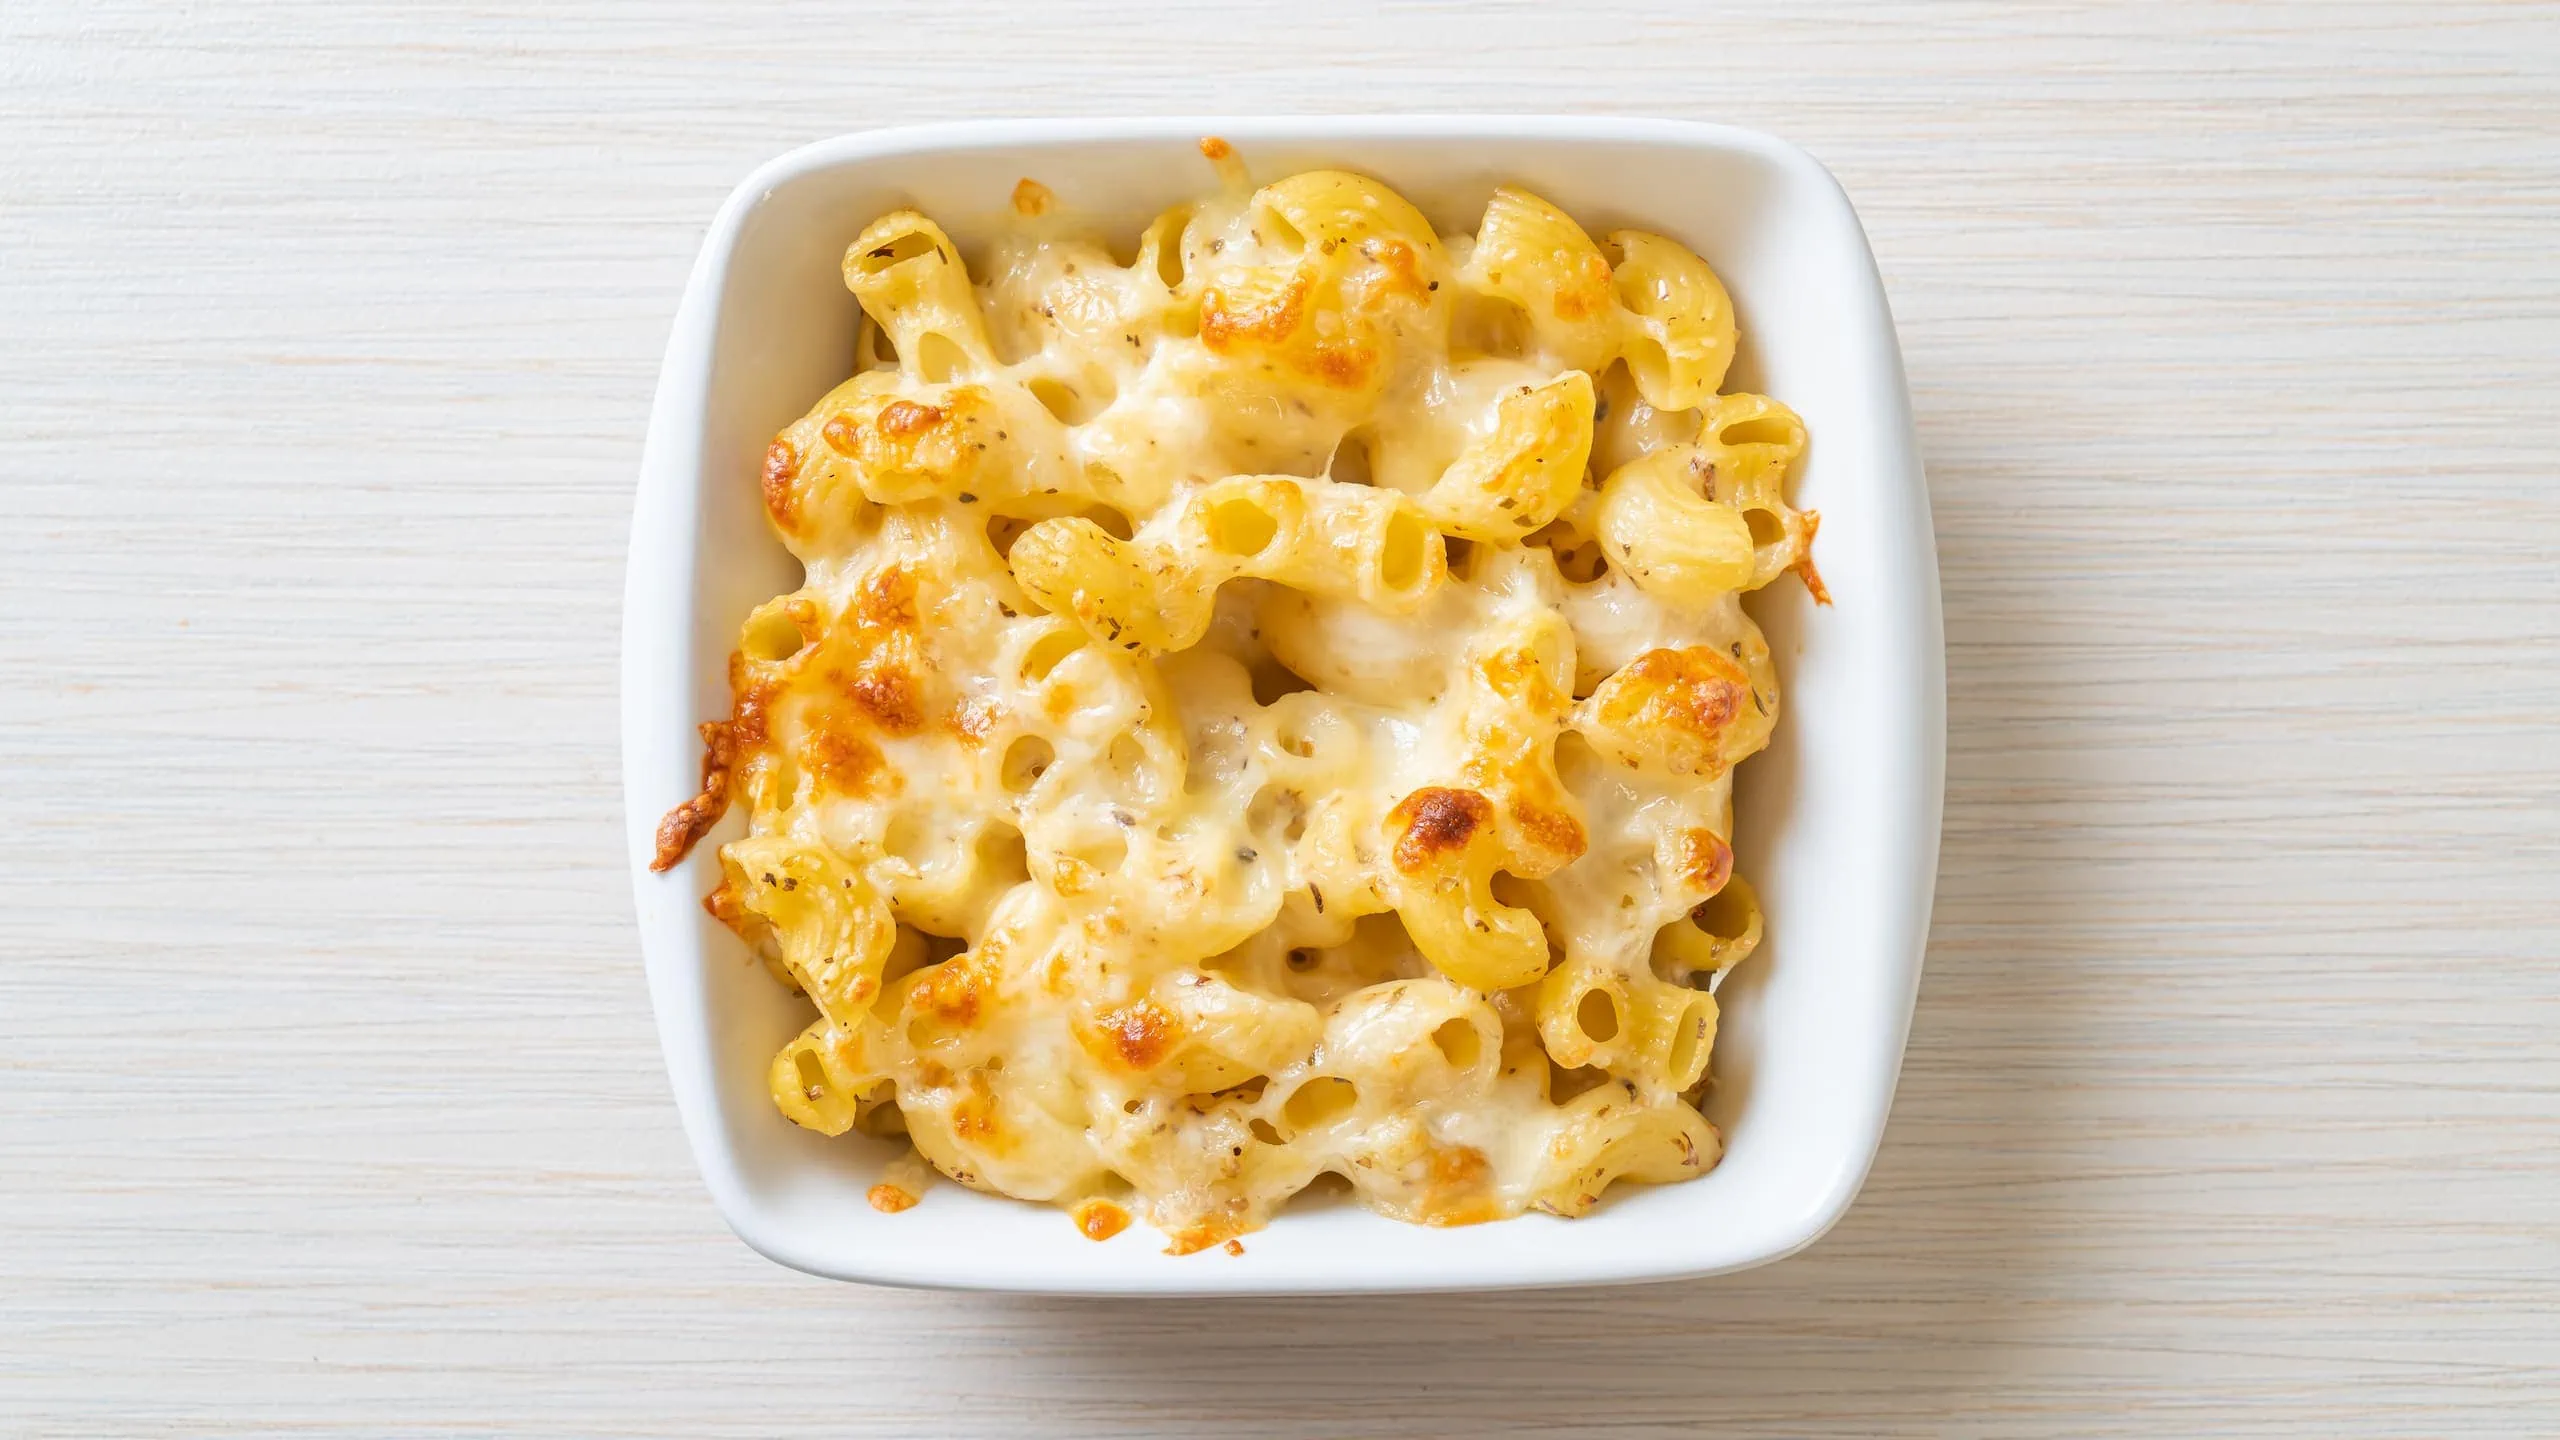 Joanna Gaines' macaroni and cheese recipe